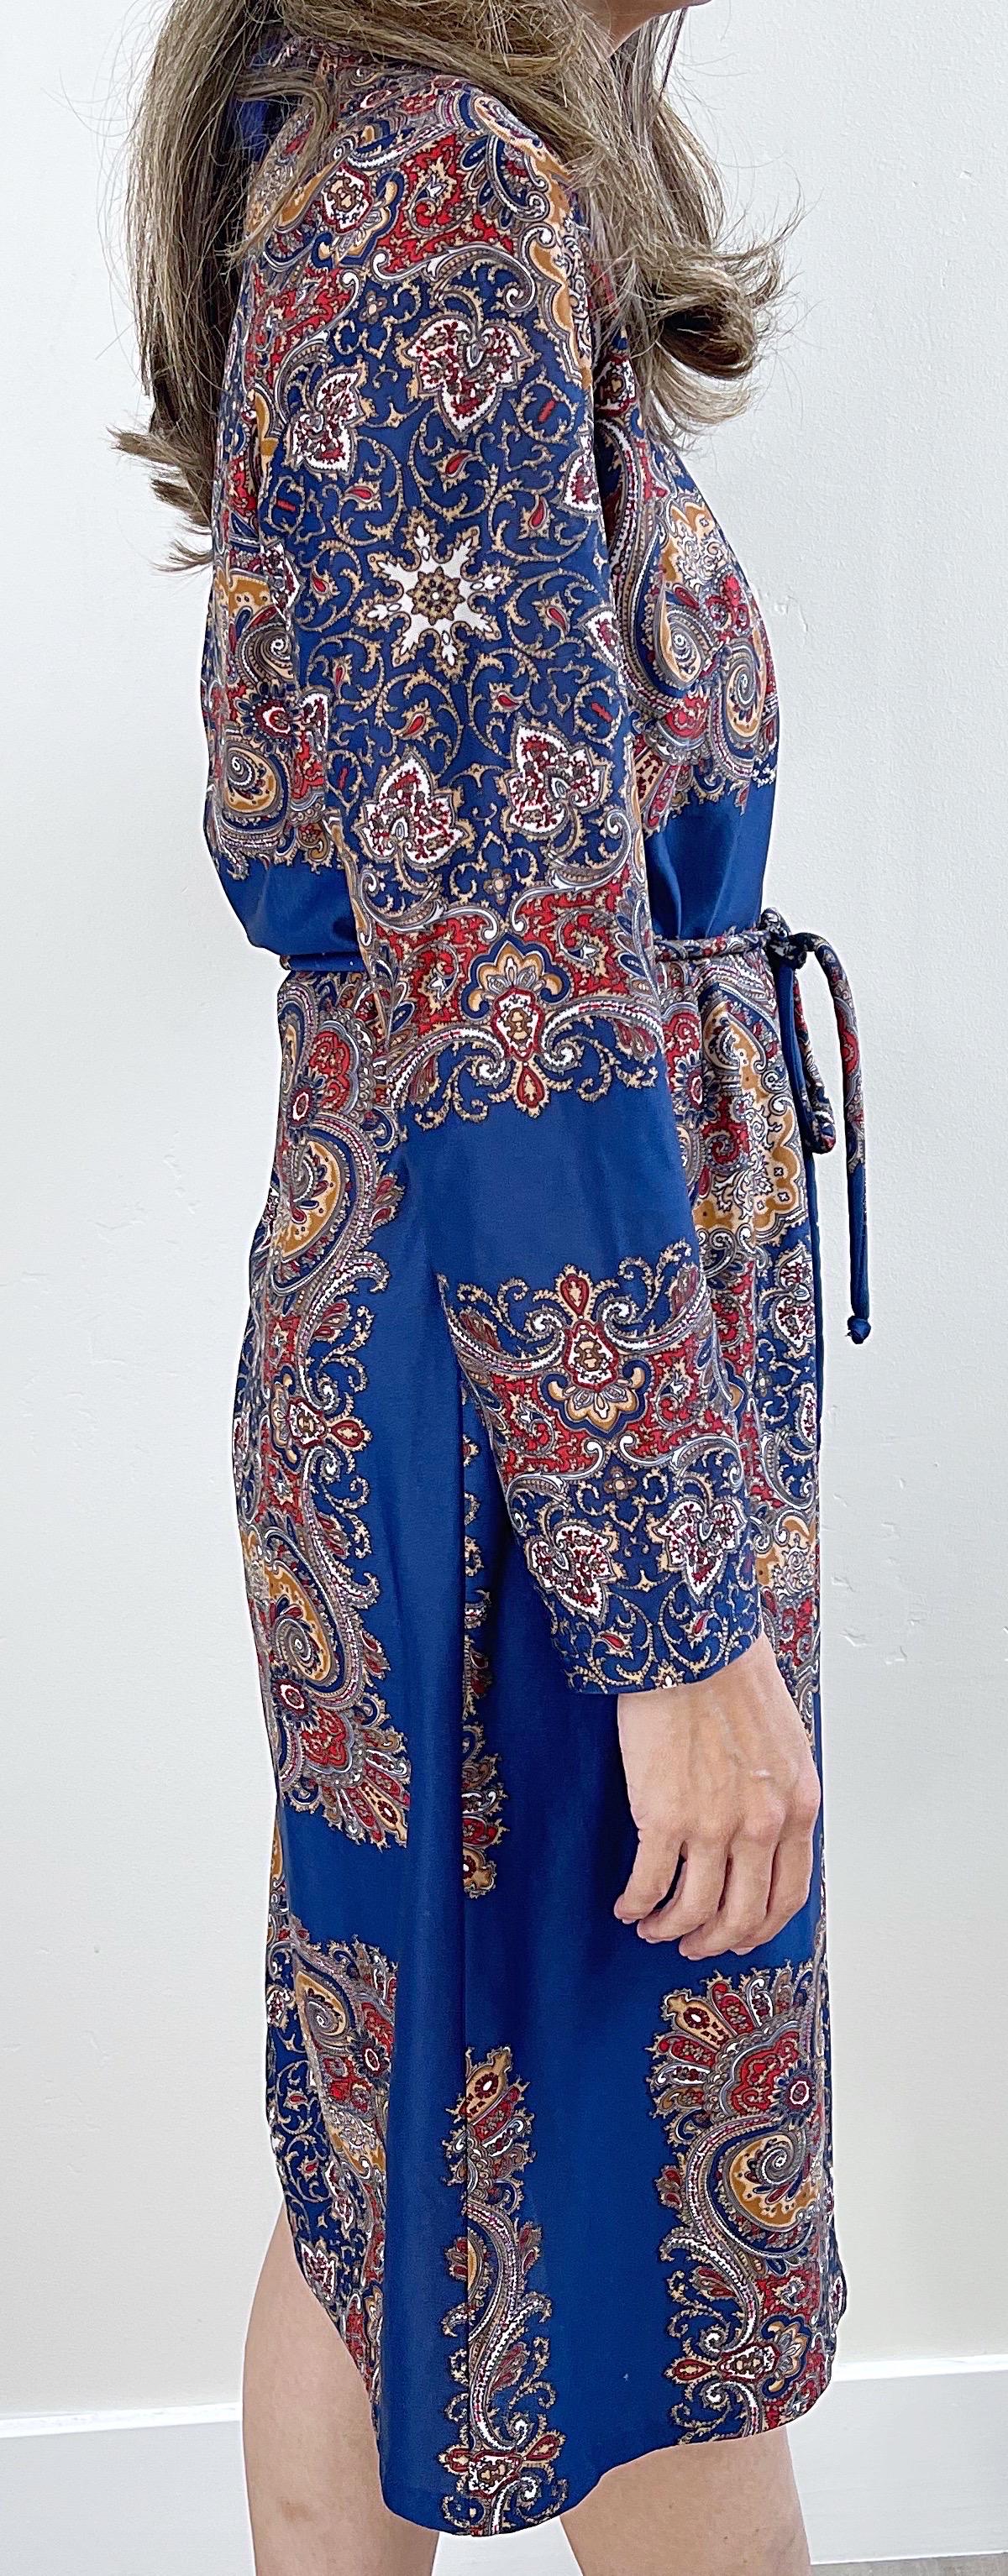 1970s Boho Chic Paisley Print Long Sleeve Mock Neck Vintage 70s Knit Dress For Sale 9